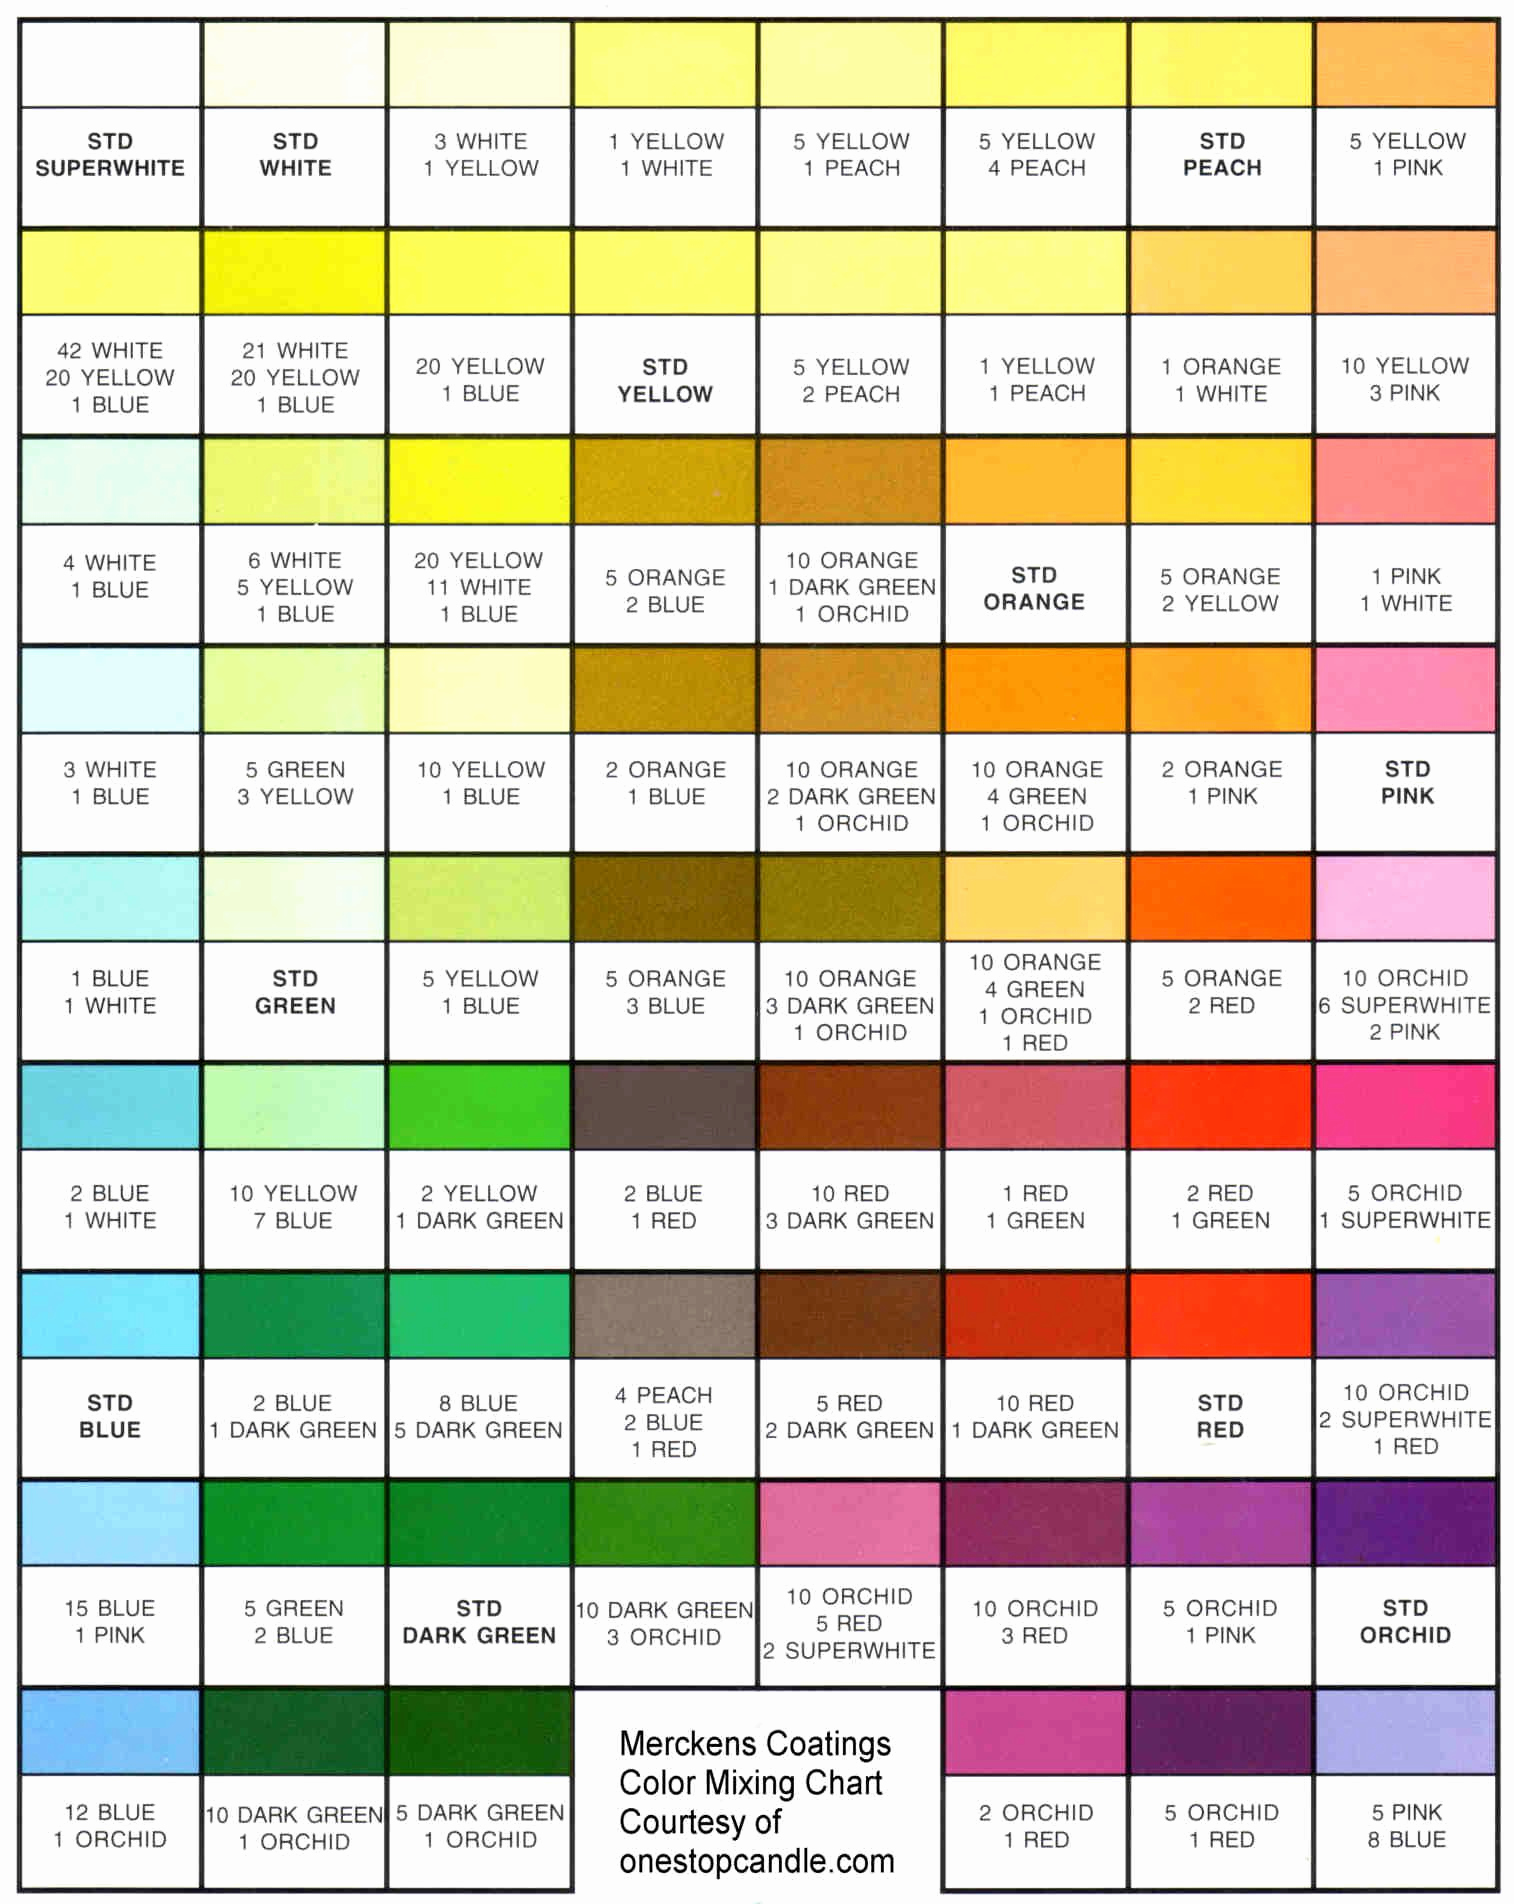 Food Color Mixing Chart New Merckens Rainbow Candy Coating Color Mixing Chart